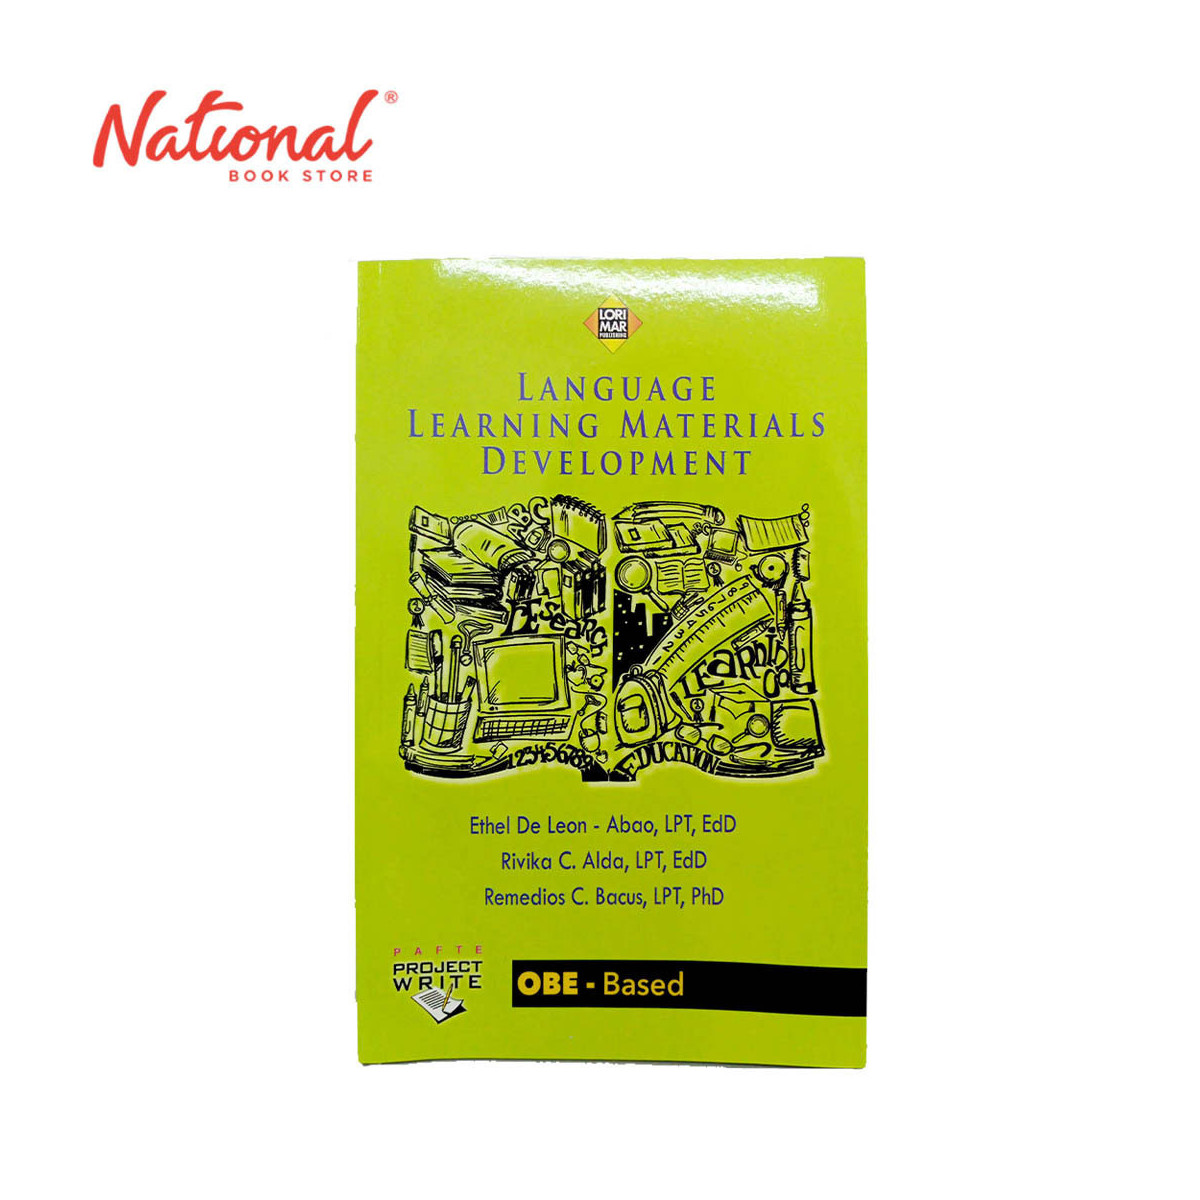 Language Learning Materials Development (OBE-Based) by Ethel De Leon-Abao, et. Al - Trade Paperback